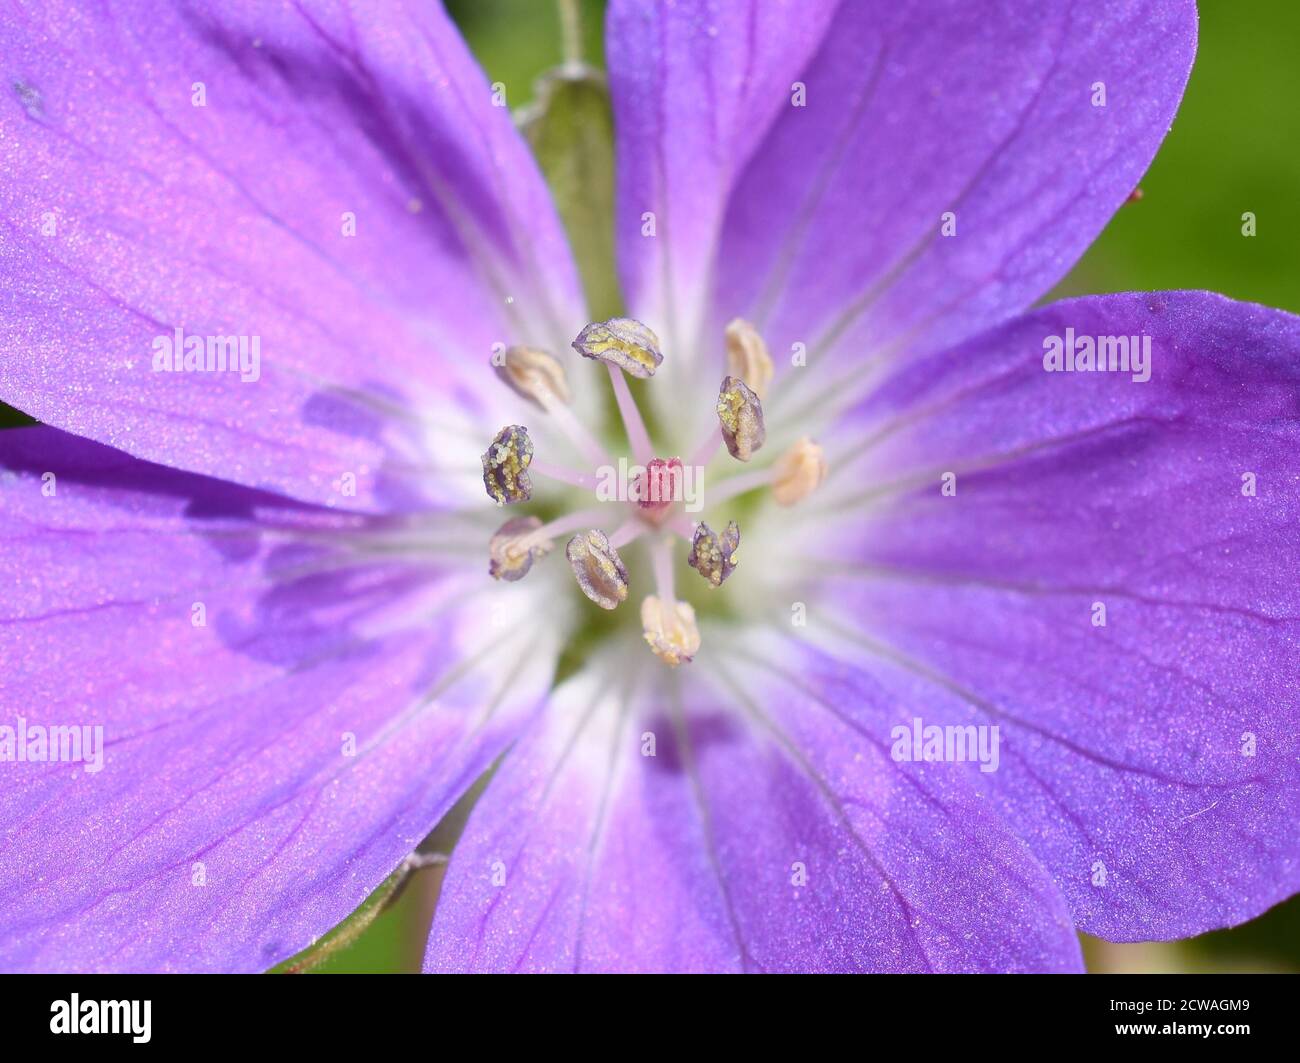 Closeup on anthers and stigma on purple woddland geranium cranesbill flower Stock Photo